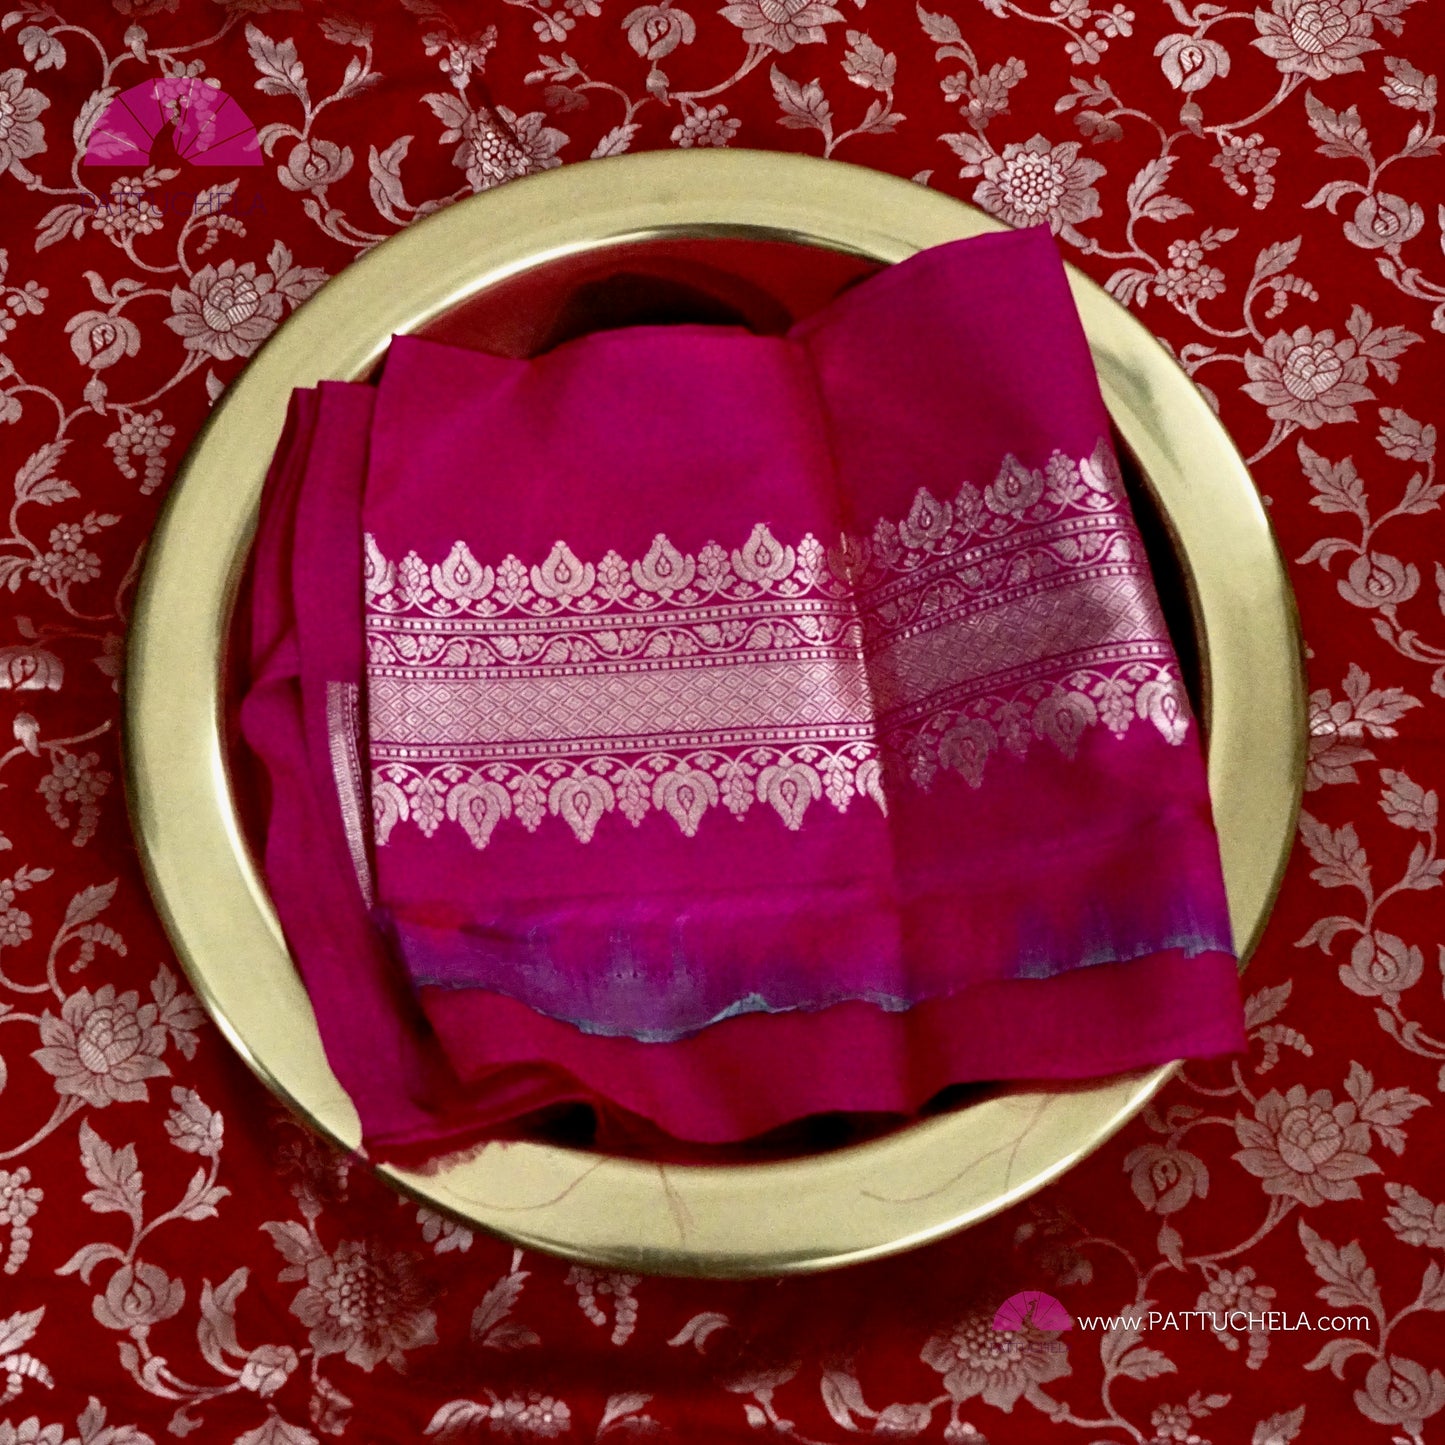 Pure Banarasi Katan Jaal Jangala handloom Silk in Red and Pink